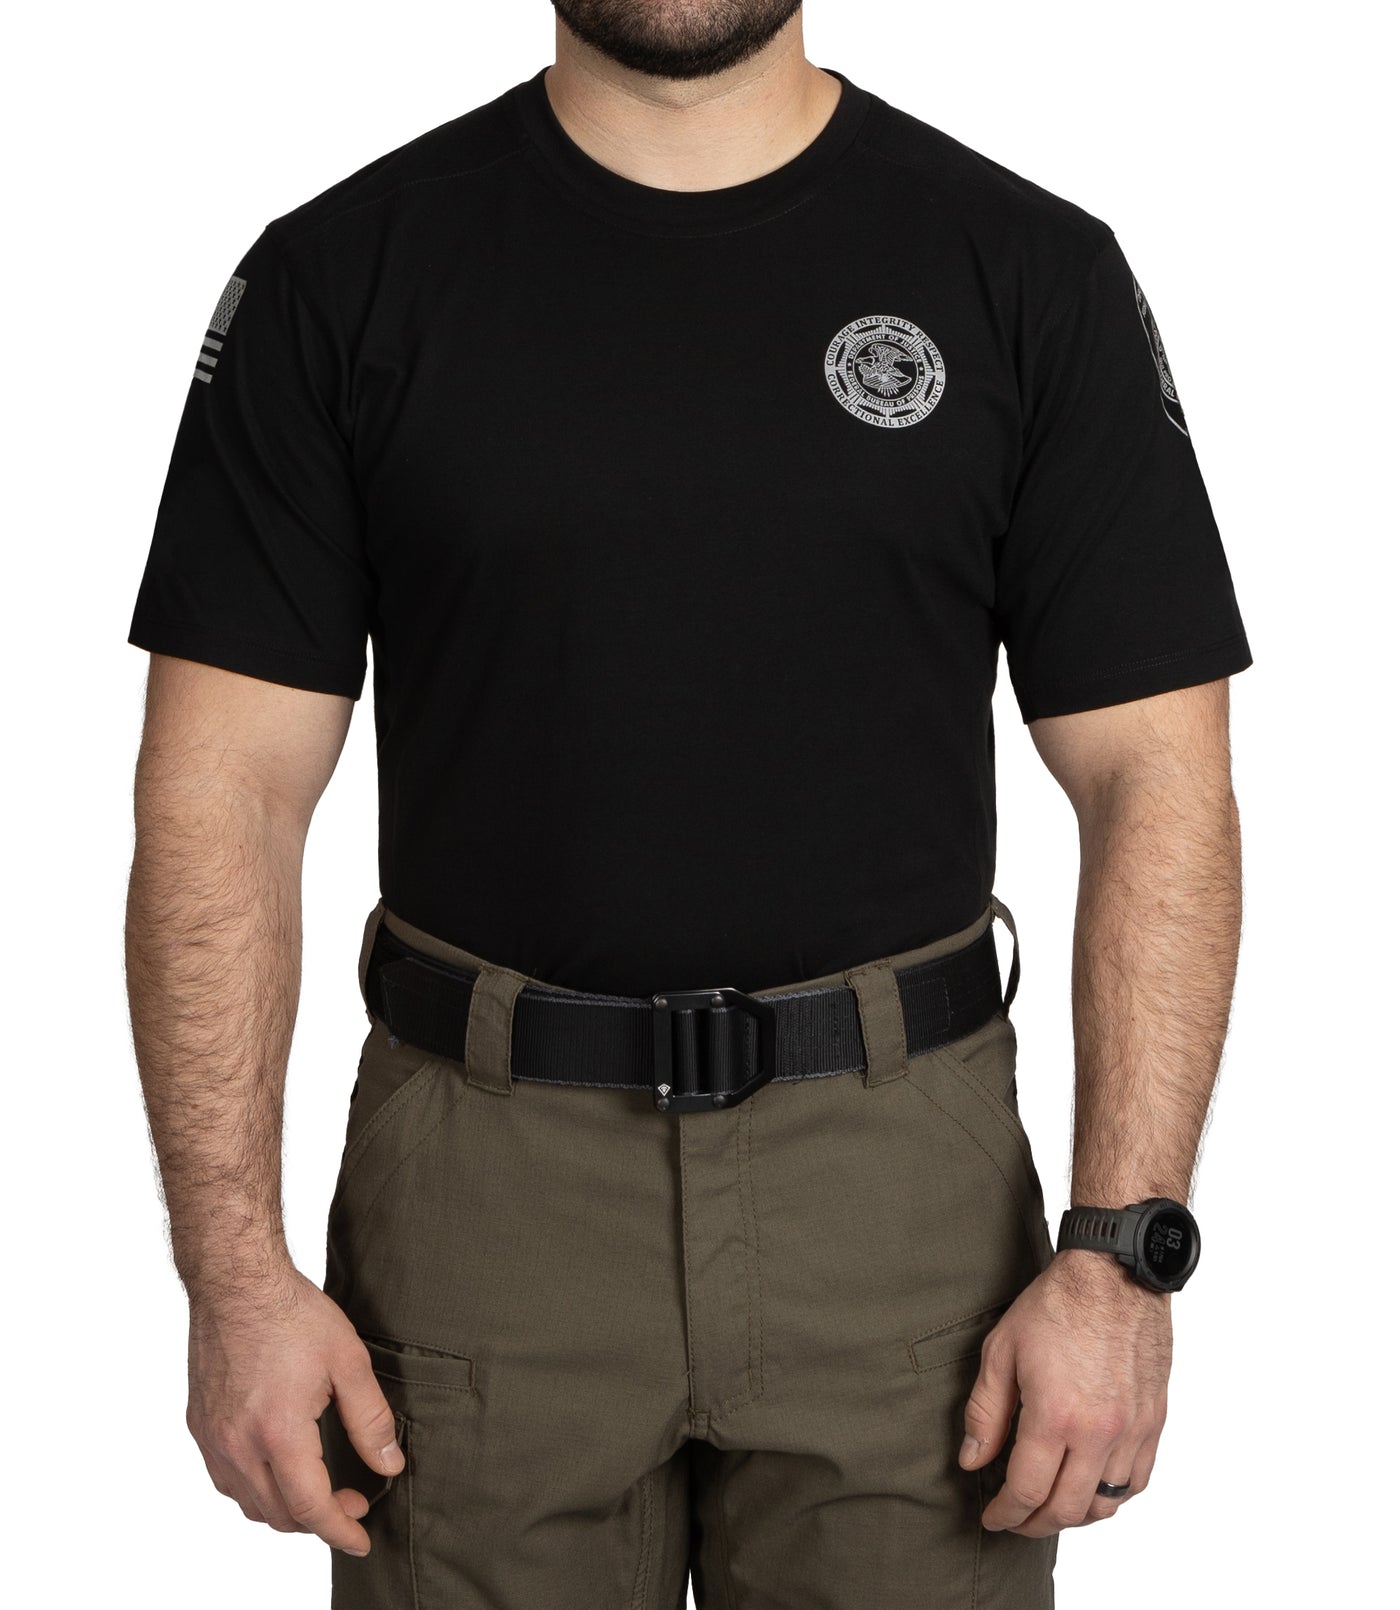 Men's Tactix Series Cotton Short Sleeve T-Shirt